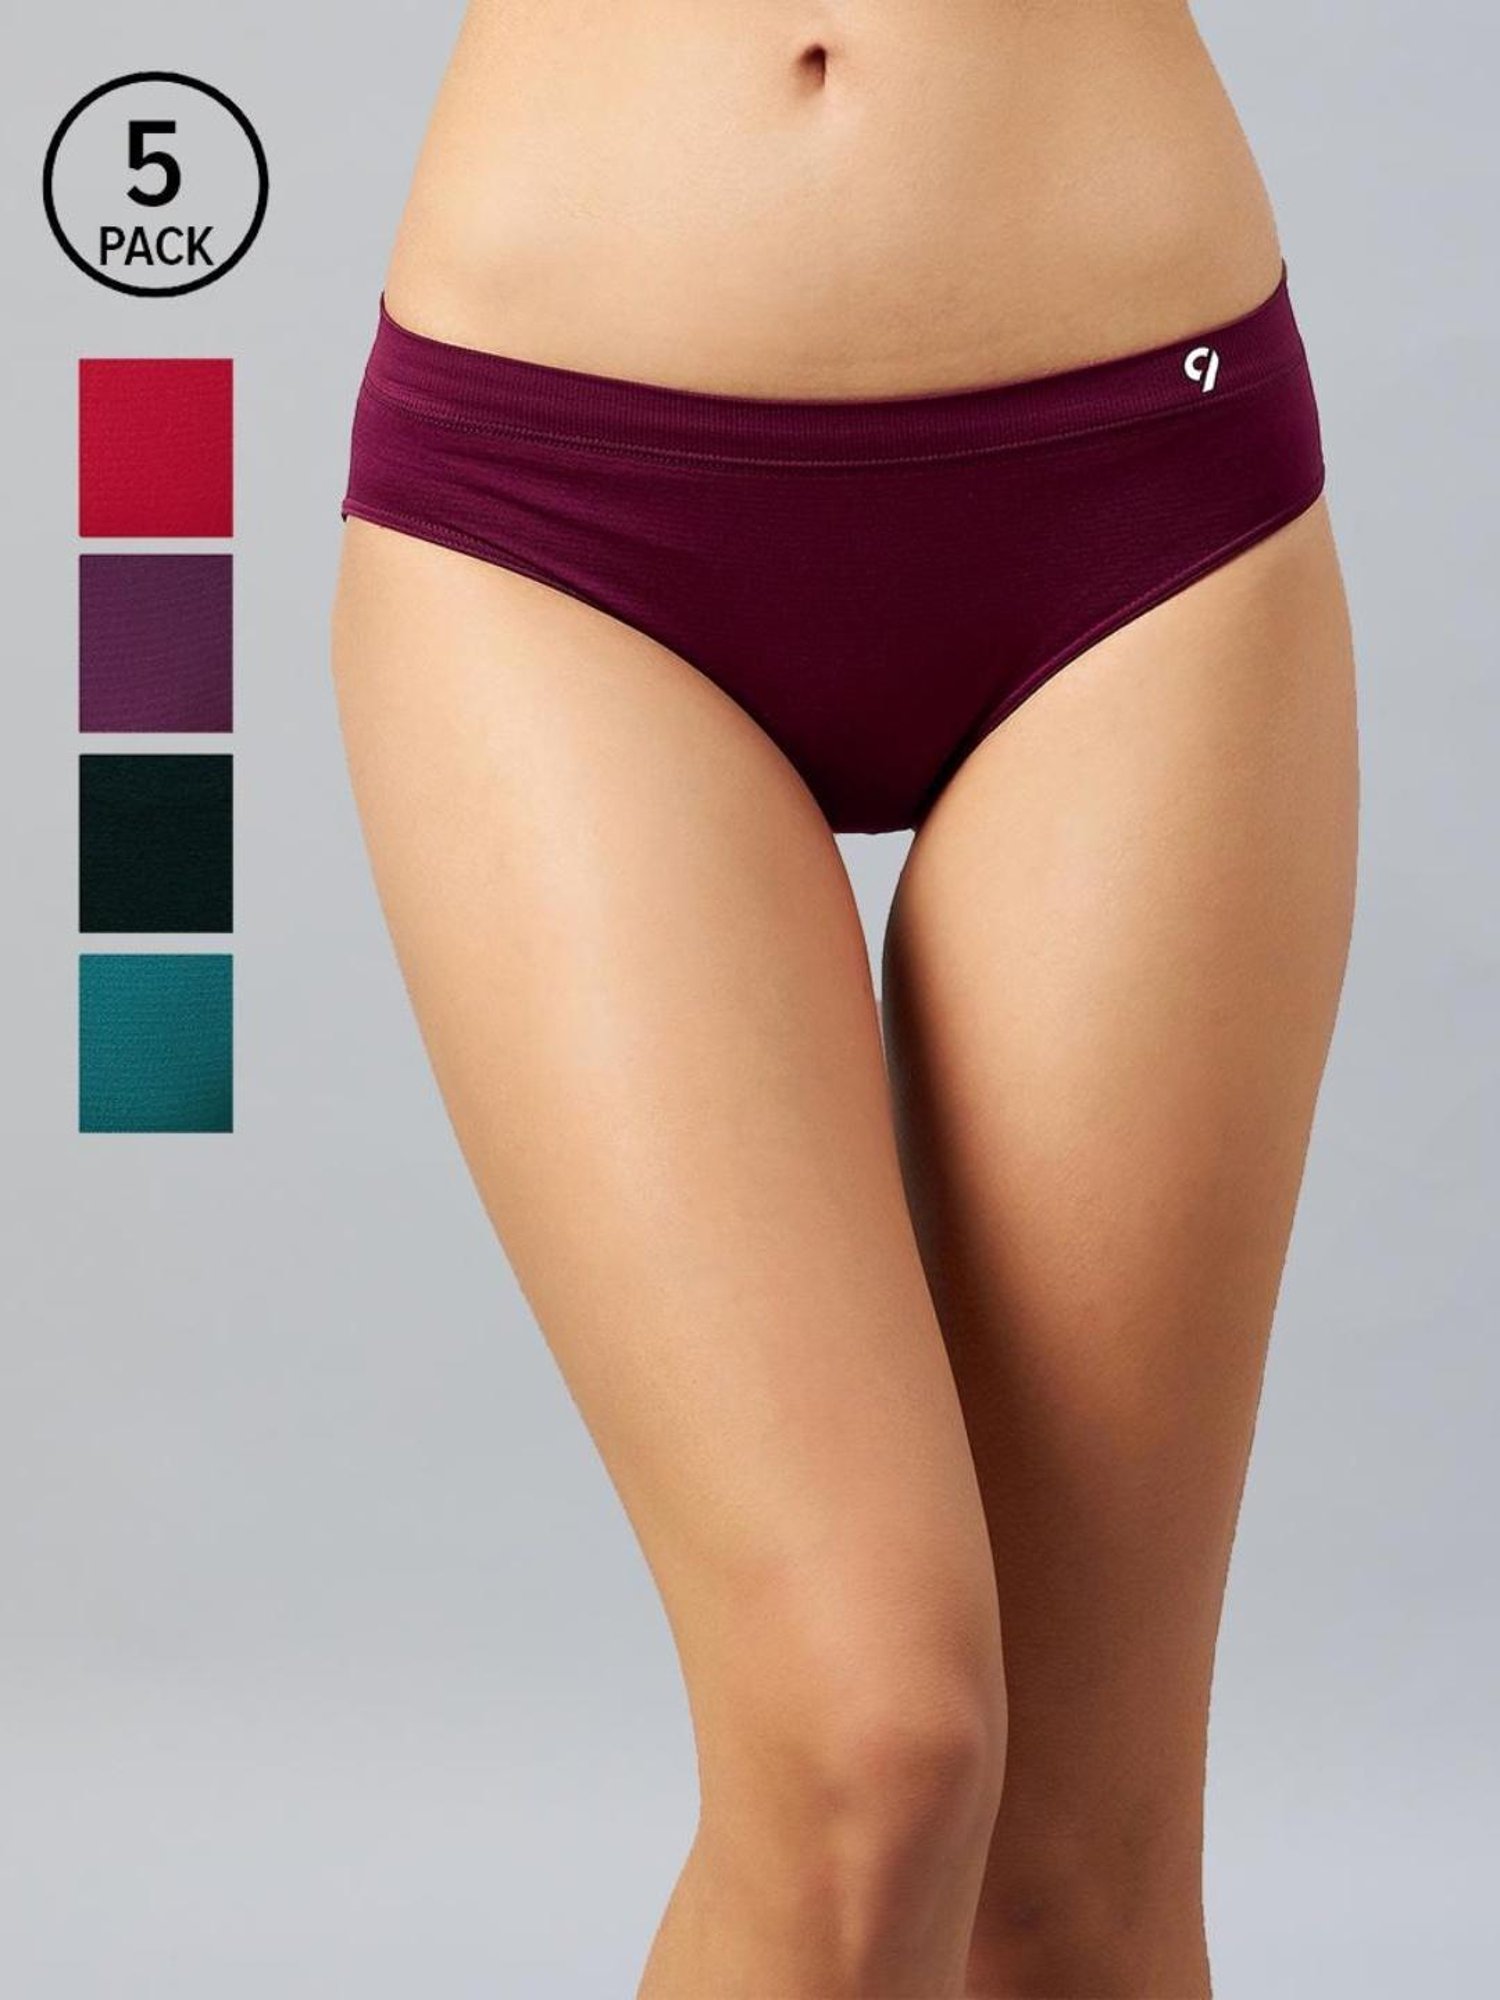 Buy C9 Airwear Women's Multicolor Panty Pack online